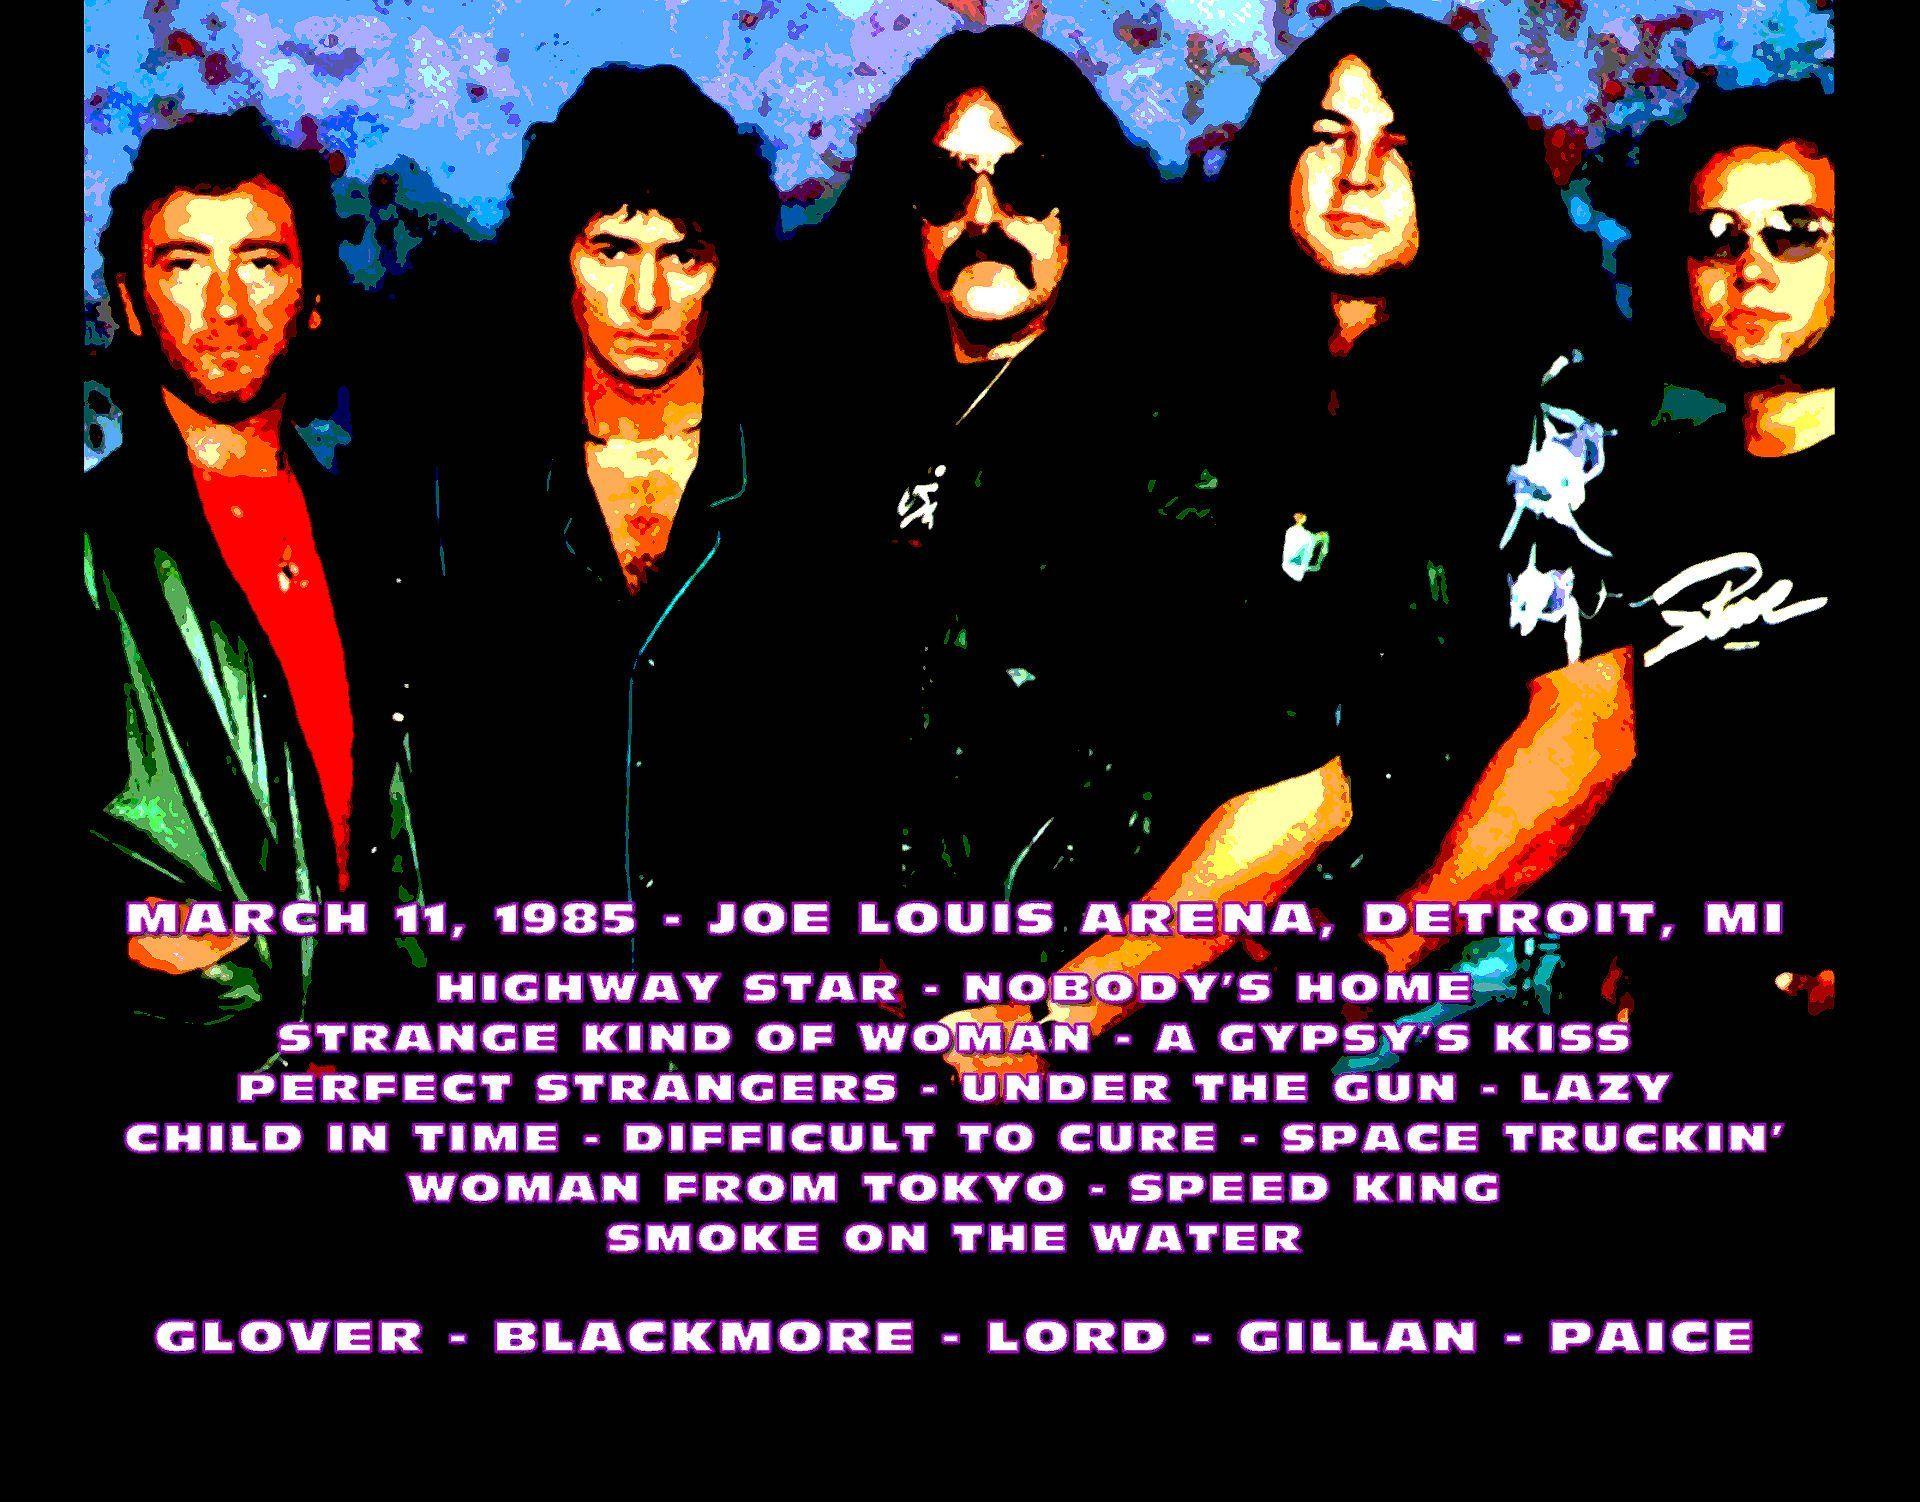 DEEP PURPLE classic hard rock blues progressive wallpaper